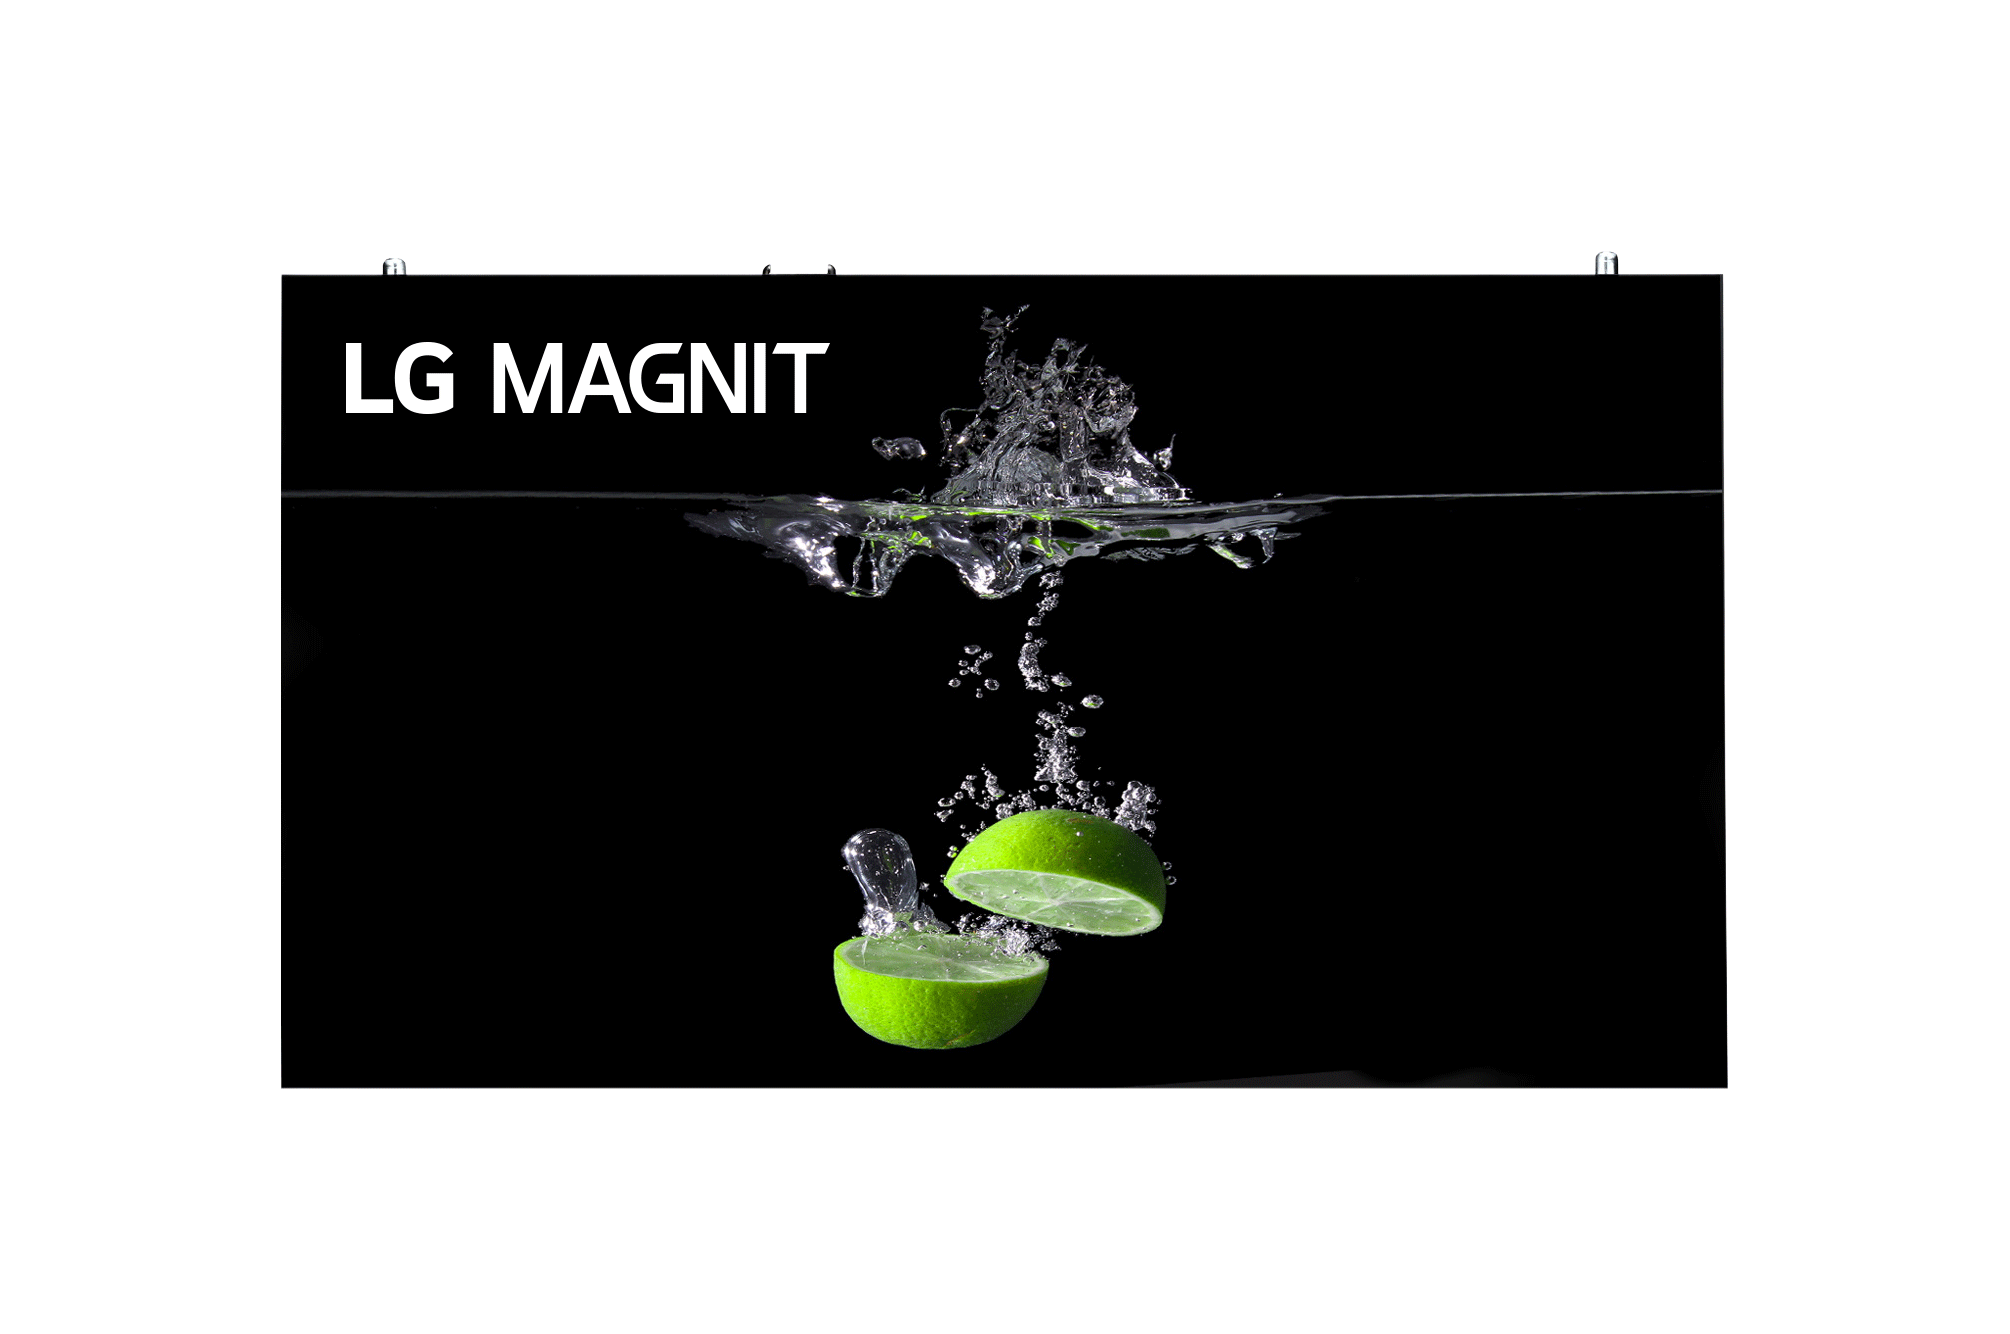 LG LG MAGNIT LSAB009